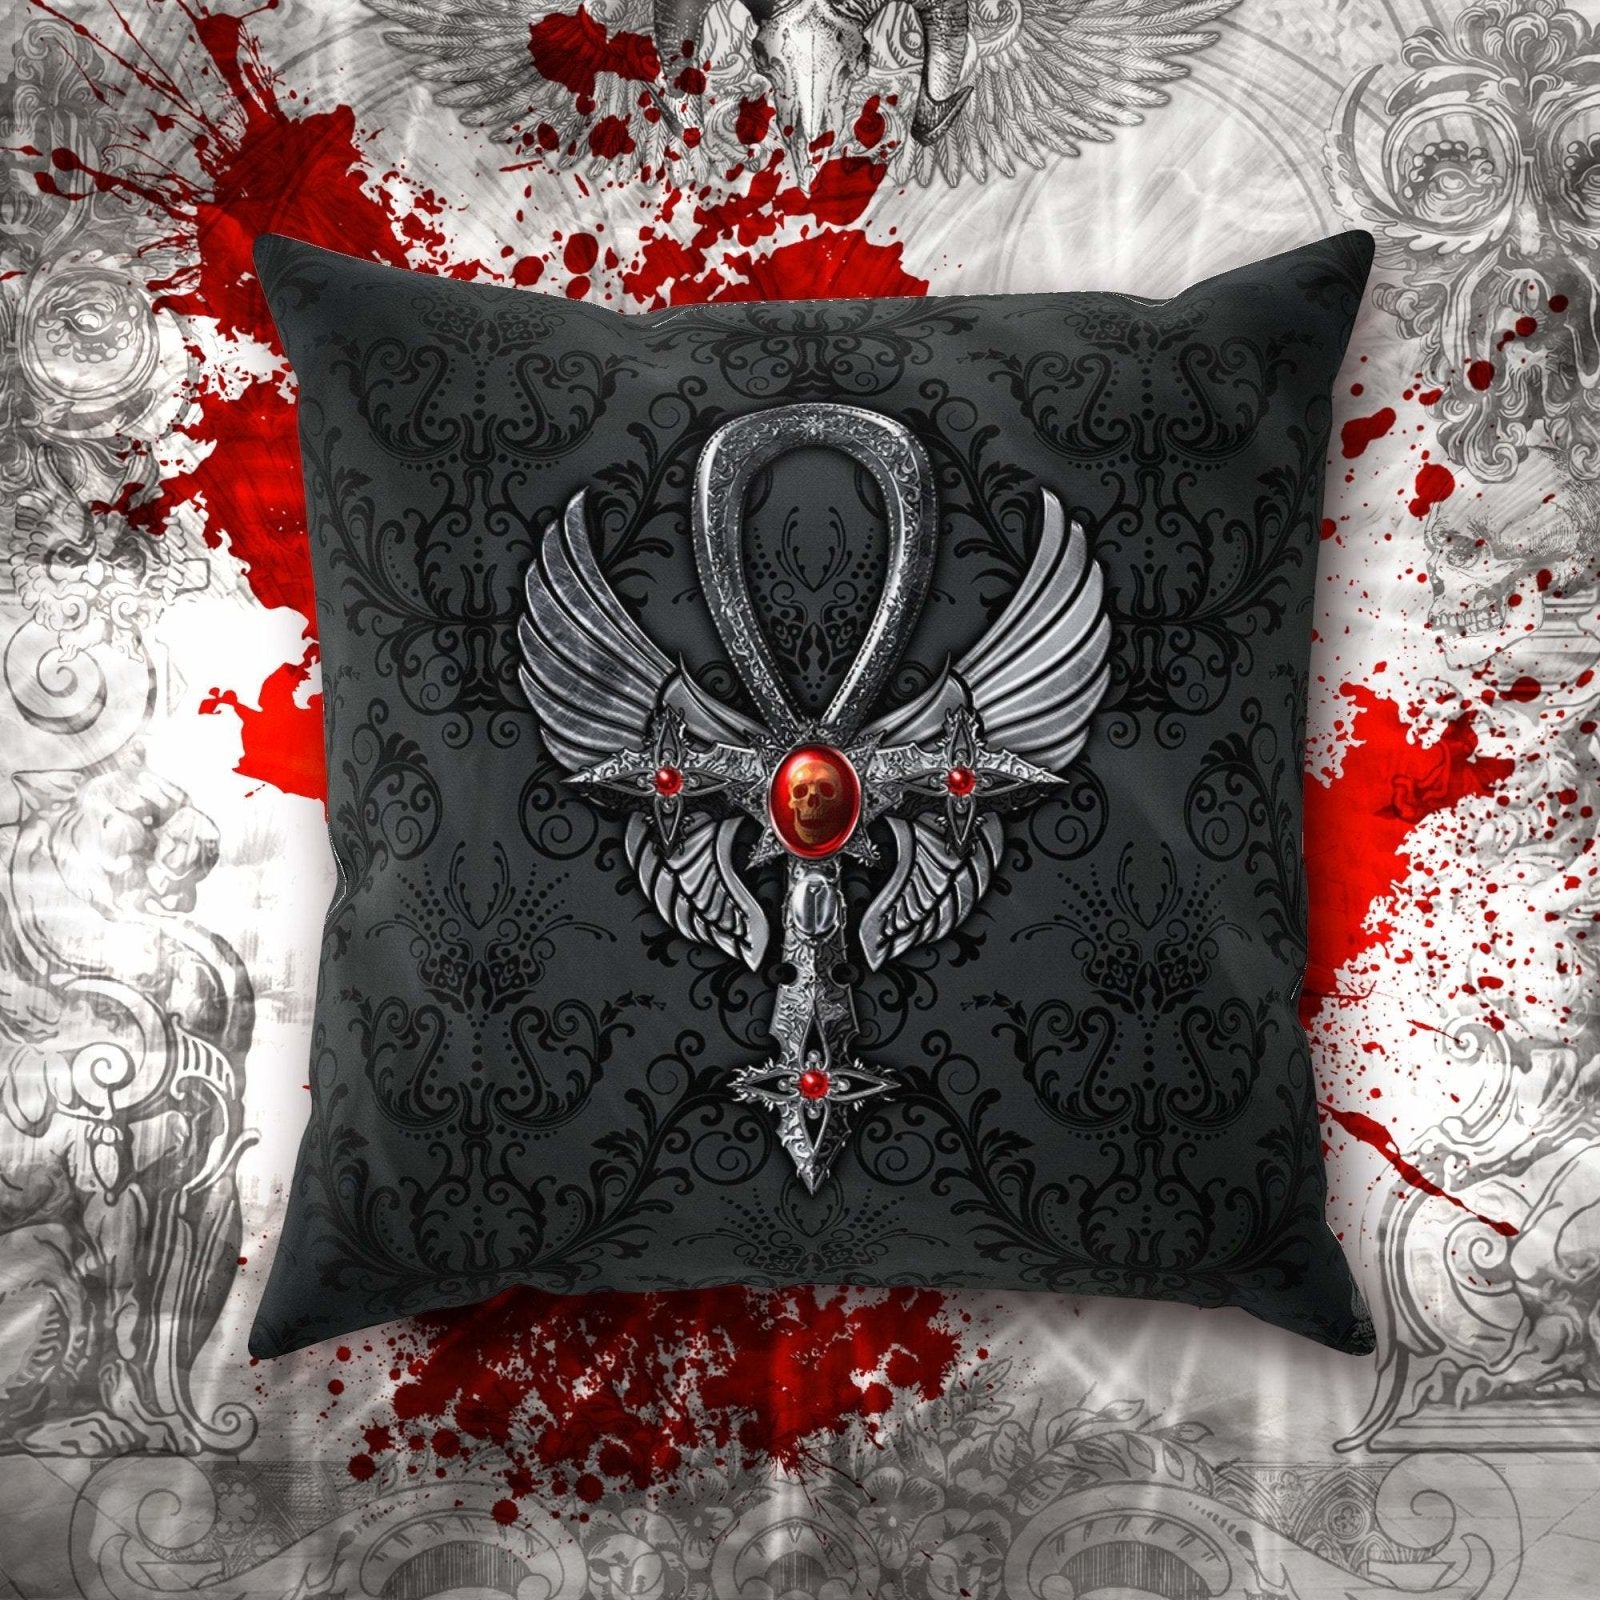 Gothic Throw Pillow, Decorative Accent Cushion, Nu Goth Room Decor, Dark Art, Alternative Home - Ankh Cross, Black - Abysm Internal